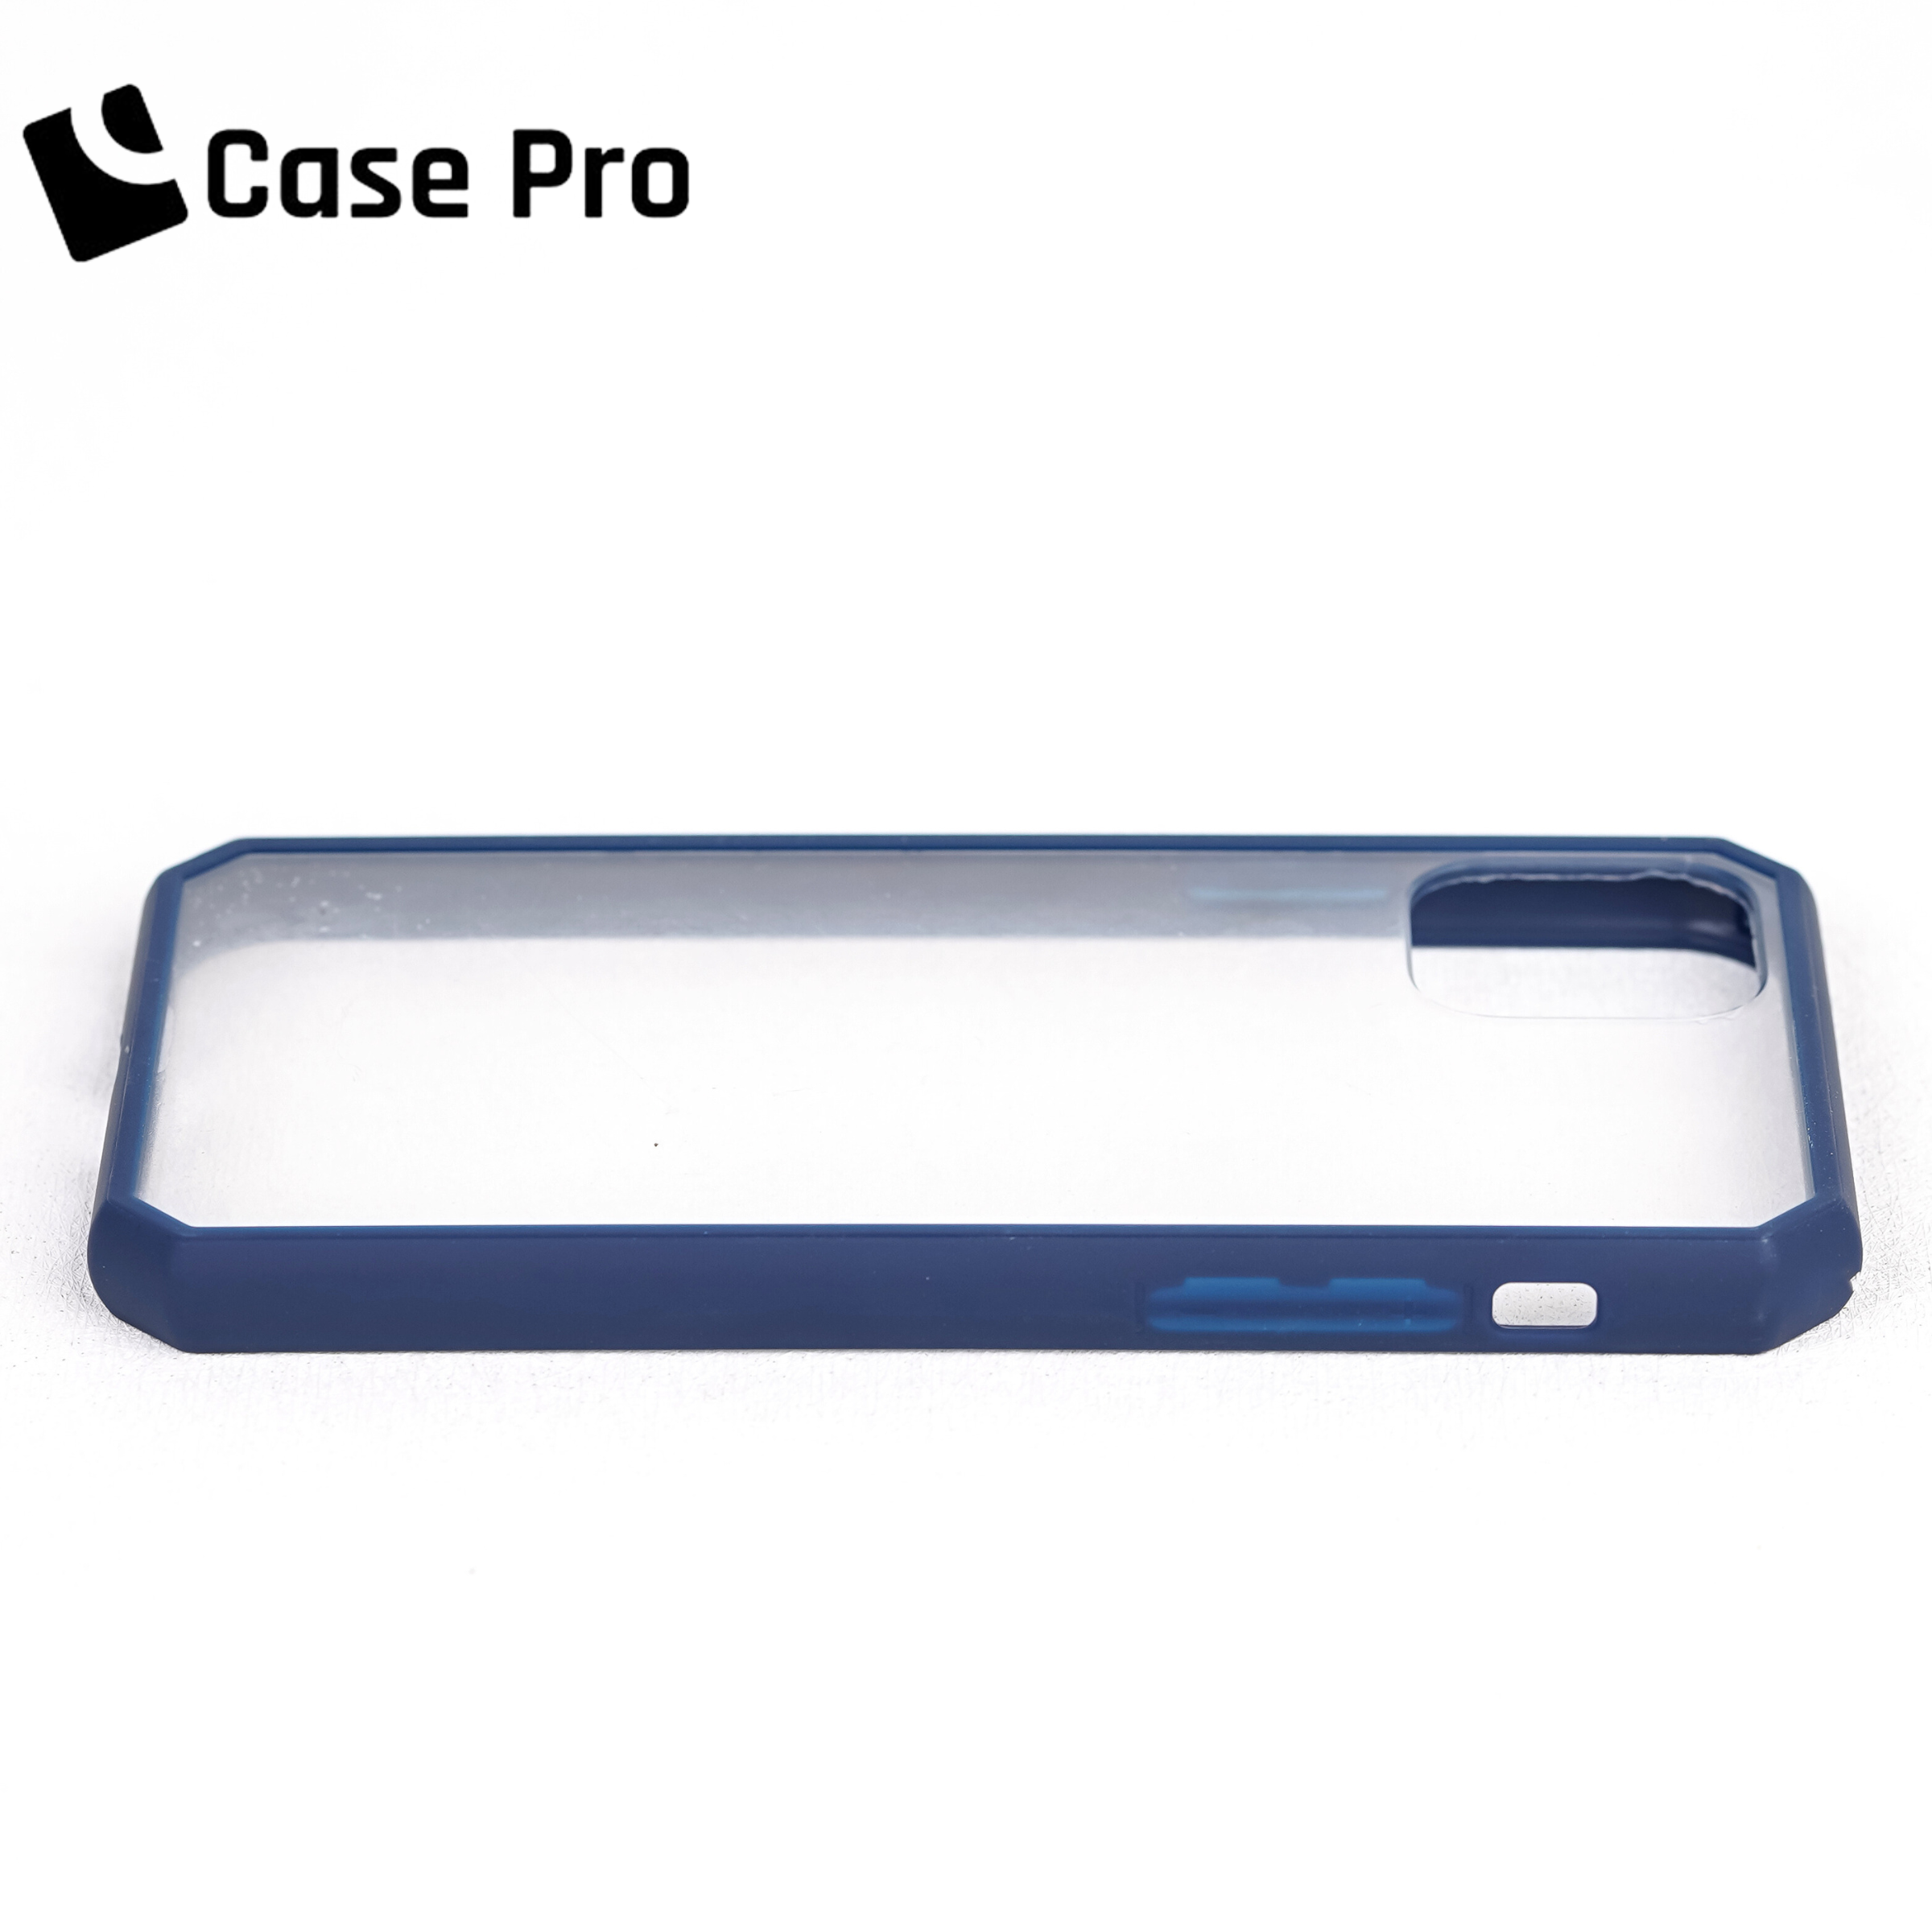 CASE PRO iPhone 11 Pro Case (Impact Protection)